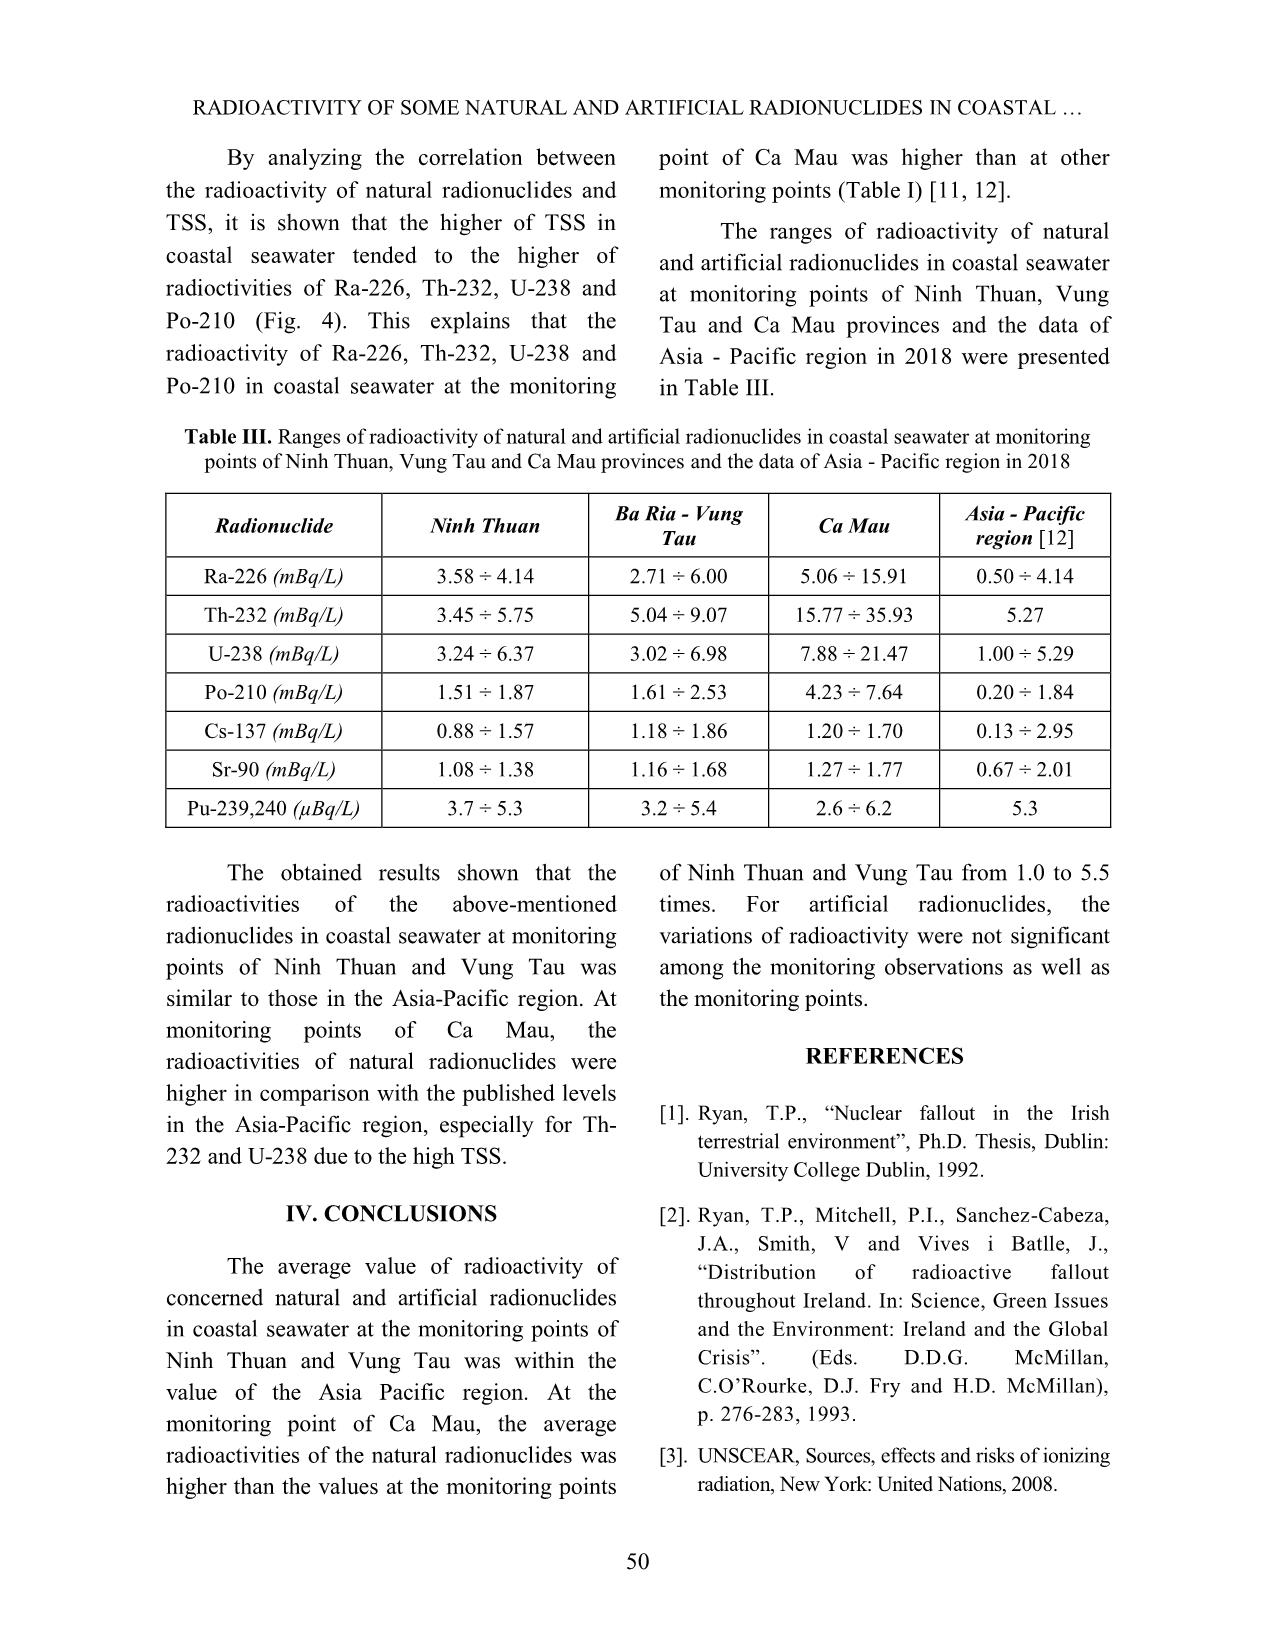 Radioactivity of some natural and artificial radionuclides in coastal seawater at Ninh Thuan, Ba Ria - Vung Tau and Ca Mau provinces in 2018 trang 7